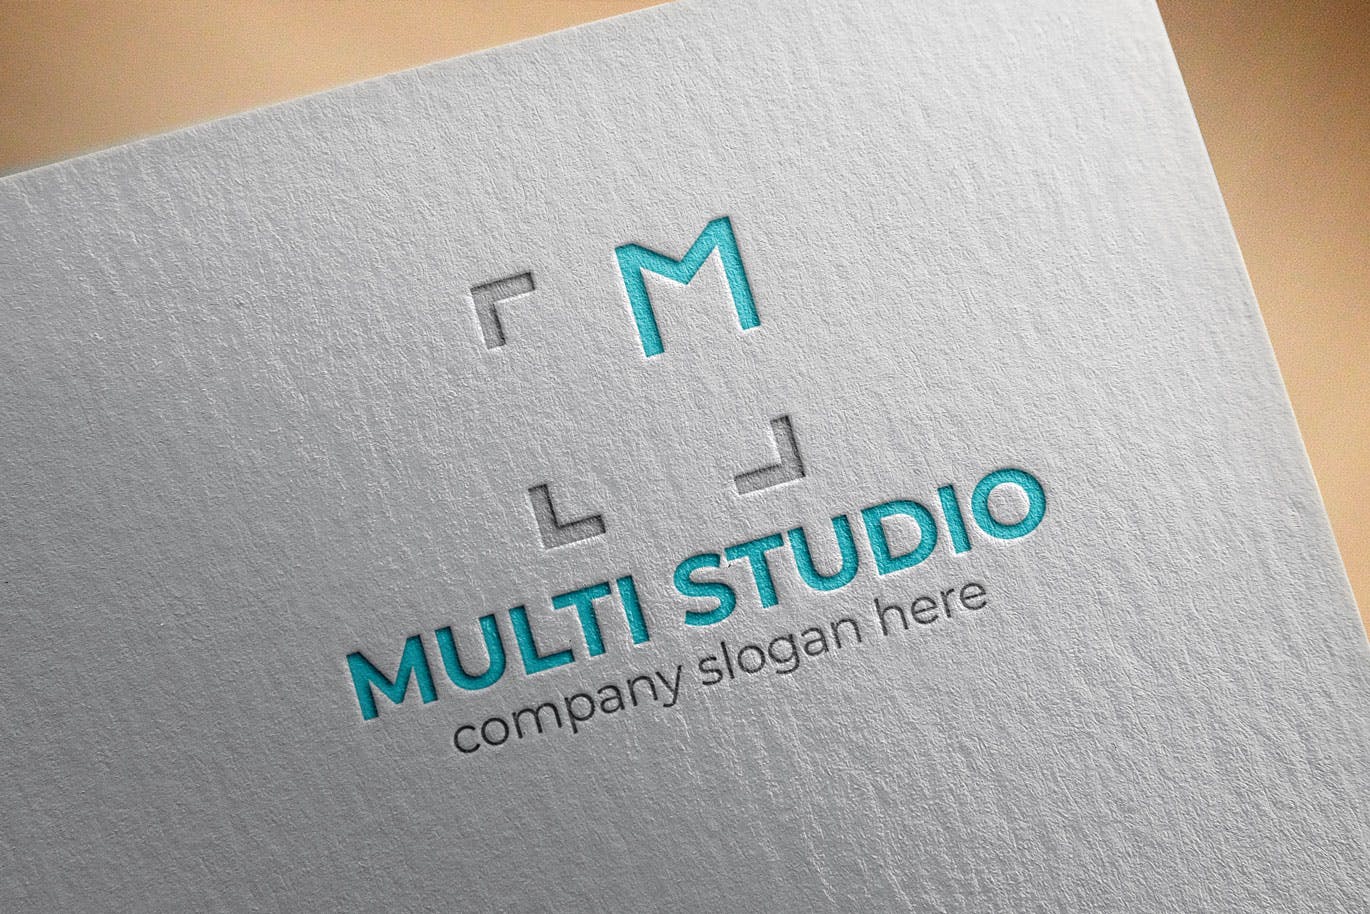 字母M创意图形企业品牌Logo设计第一素材精选模板 Letter Based Business Logo Template插图(2)